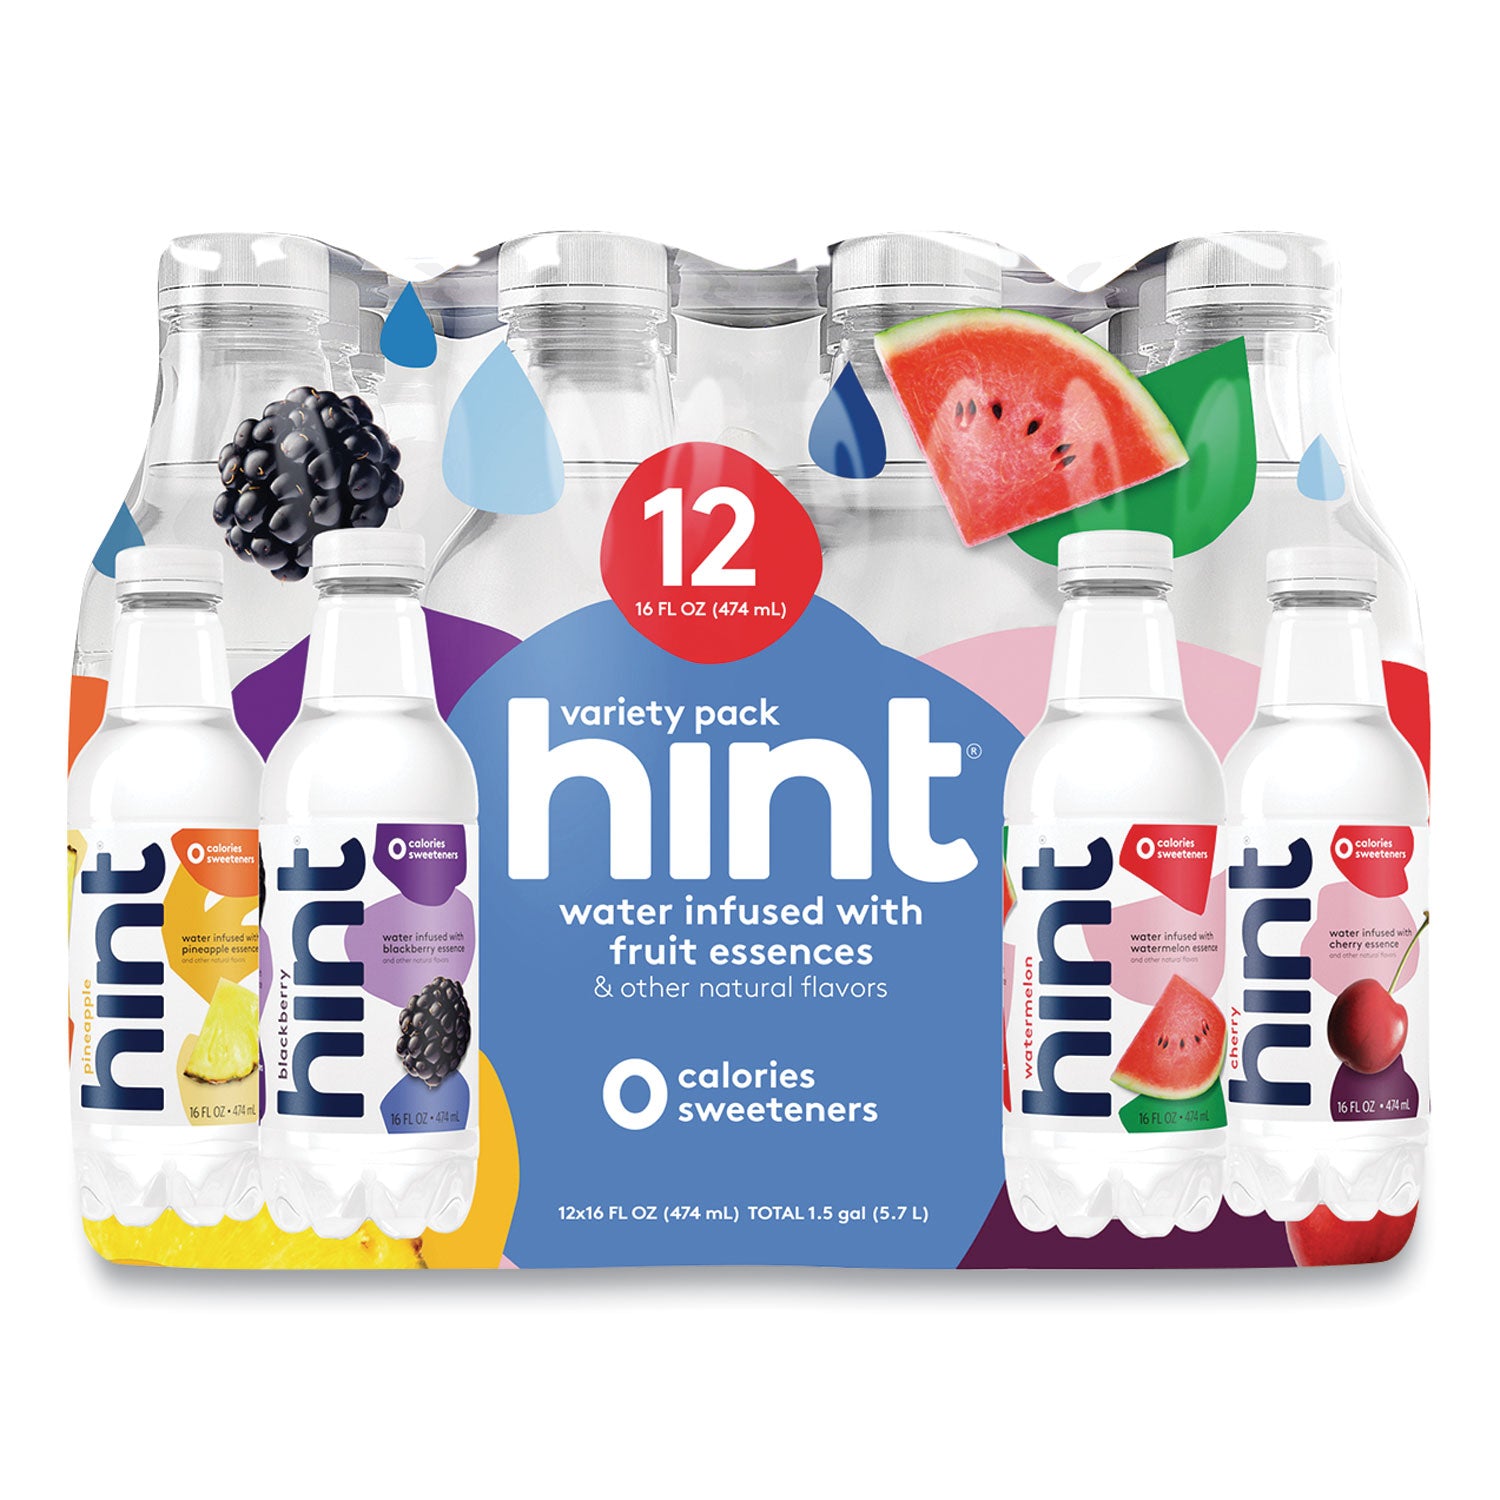 flavored-water-variety-pack-3-blackberry-3-cherry-3-pineapple-3-watermelon-16-oz-bottle-12-bottles-carton_hin00149 - 1